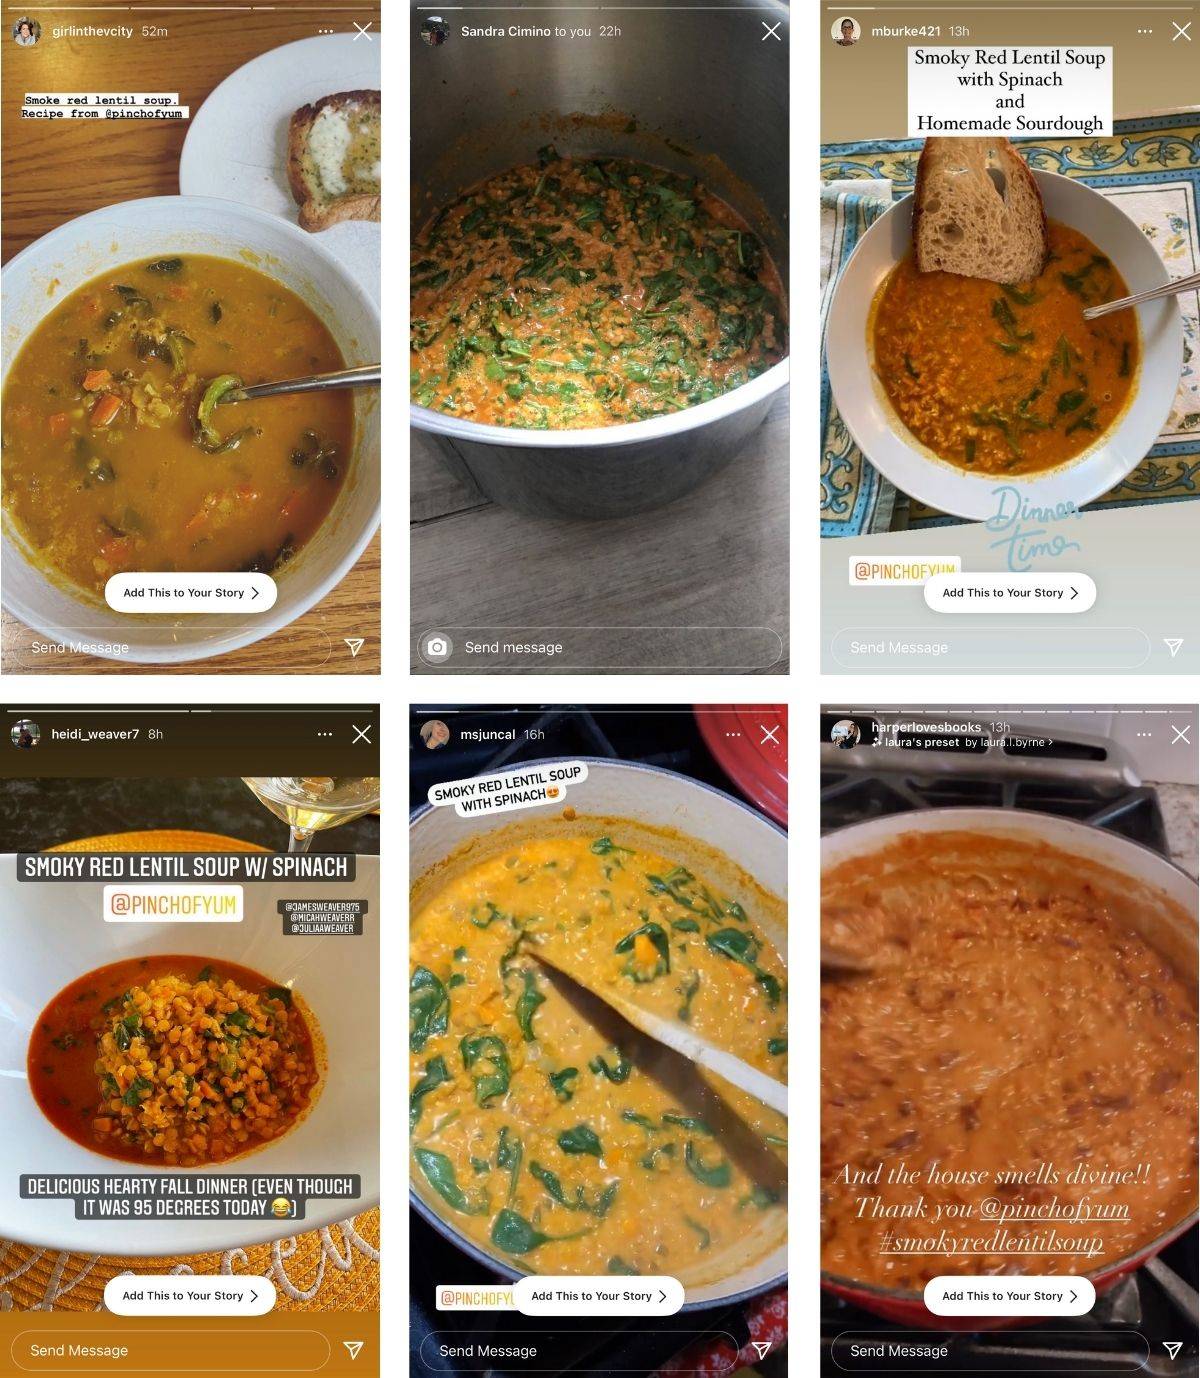 Instagram story screenshots of Smoky Red Lentil Soup.